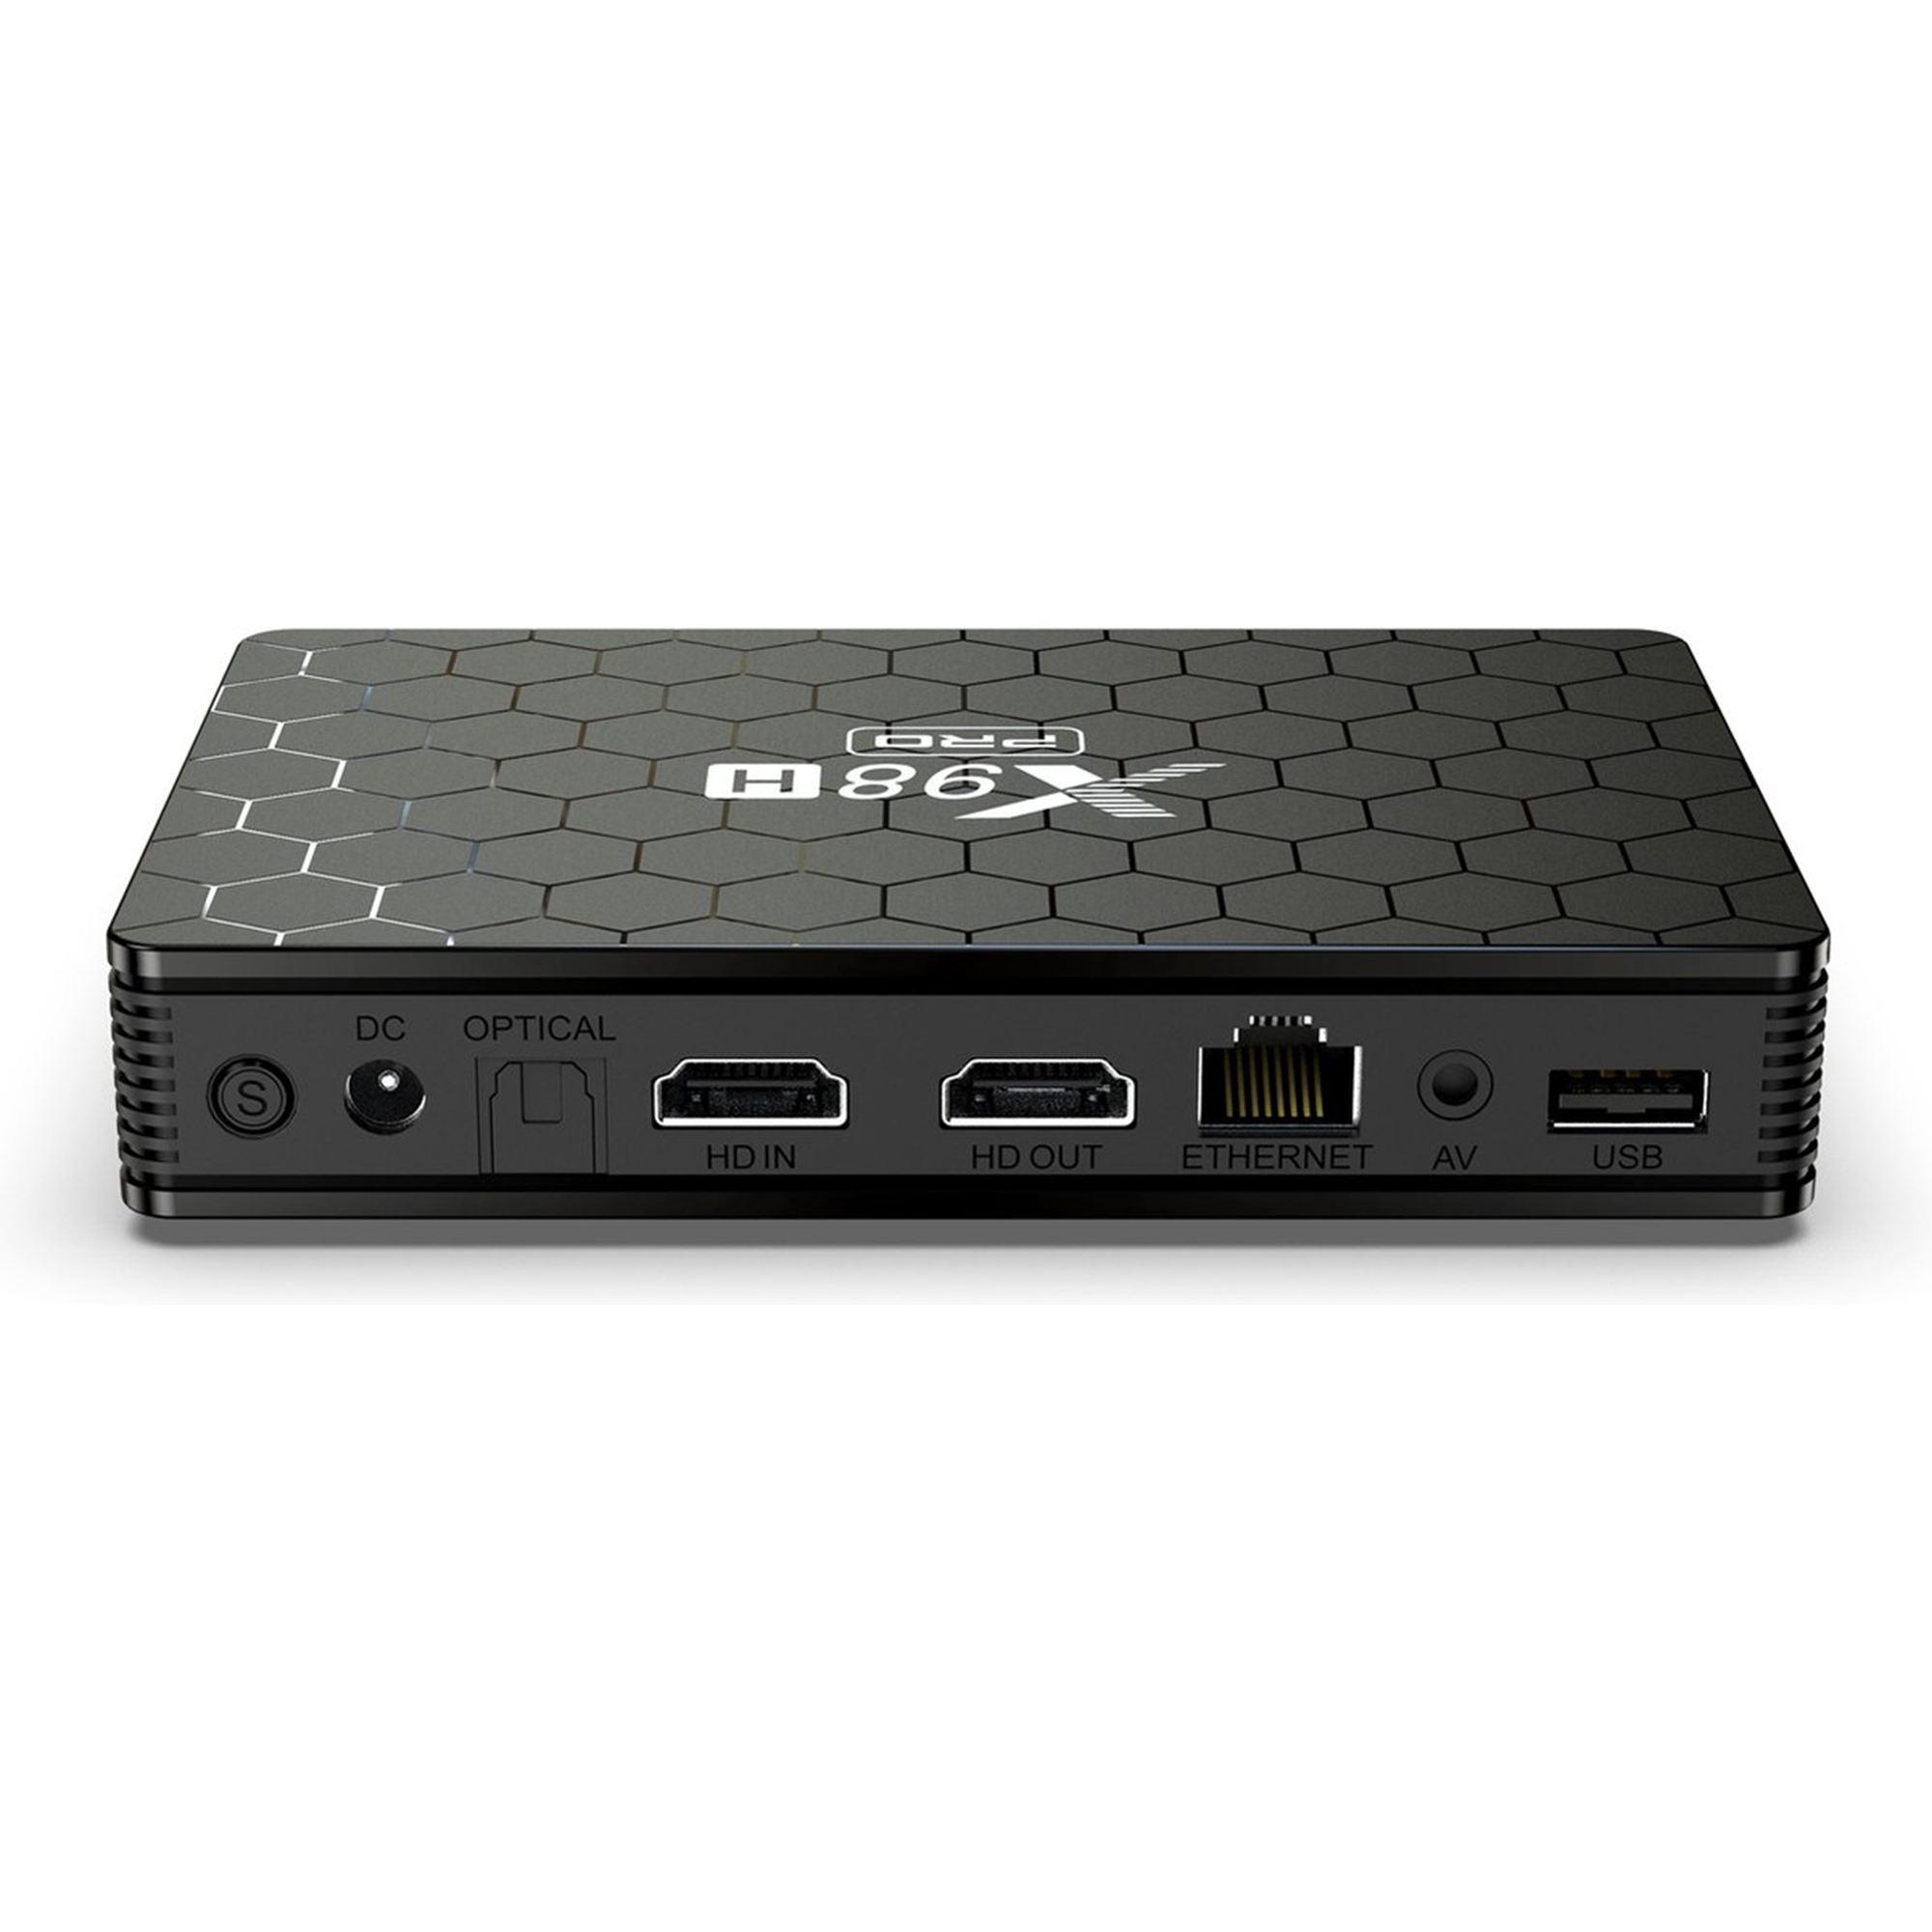 LIPA X98H GB Black Multimedia Android 32 box Pro tv player